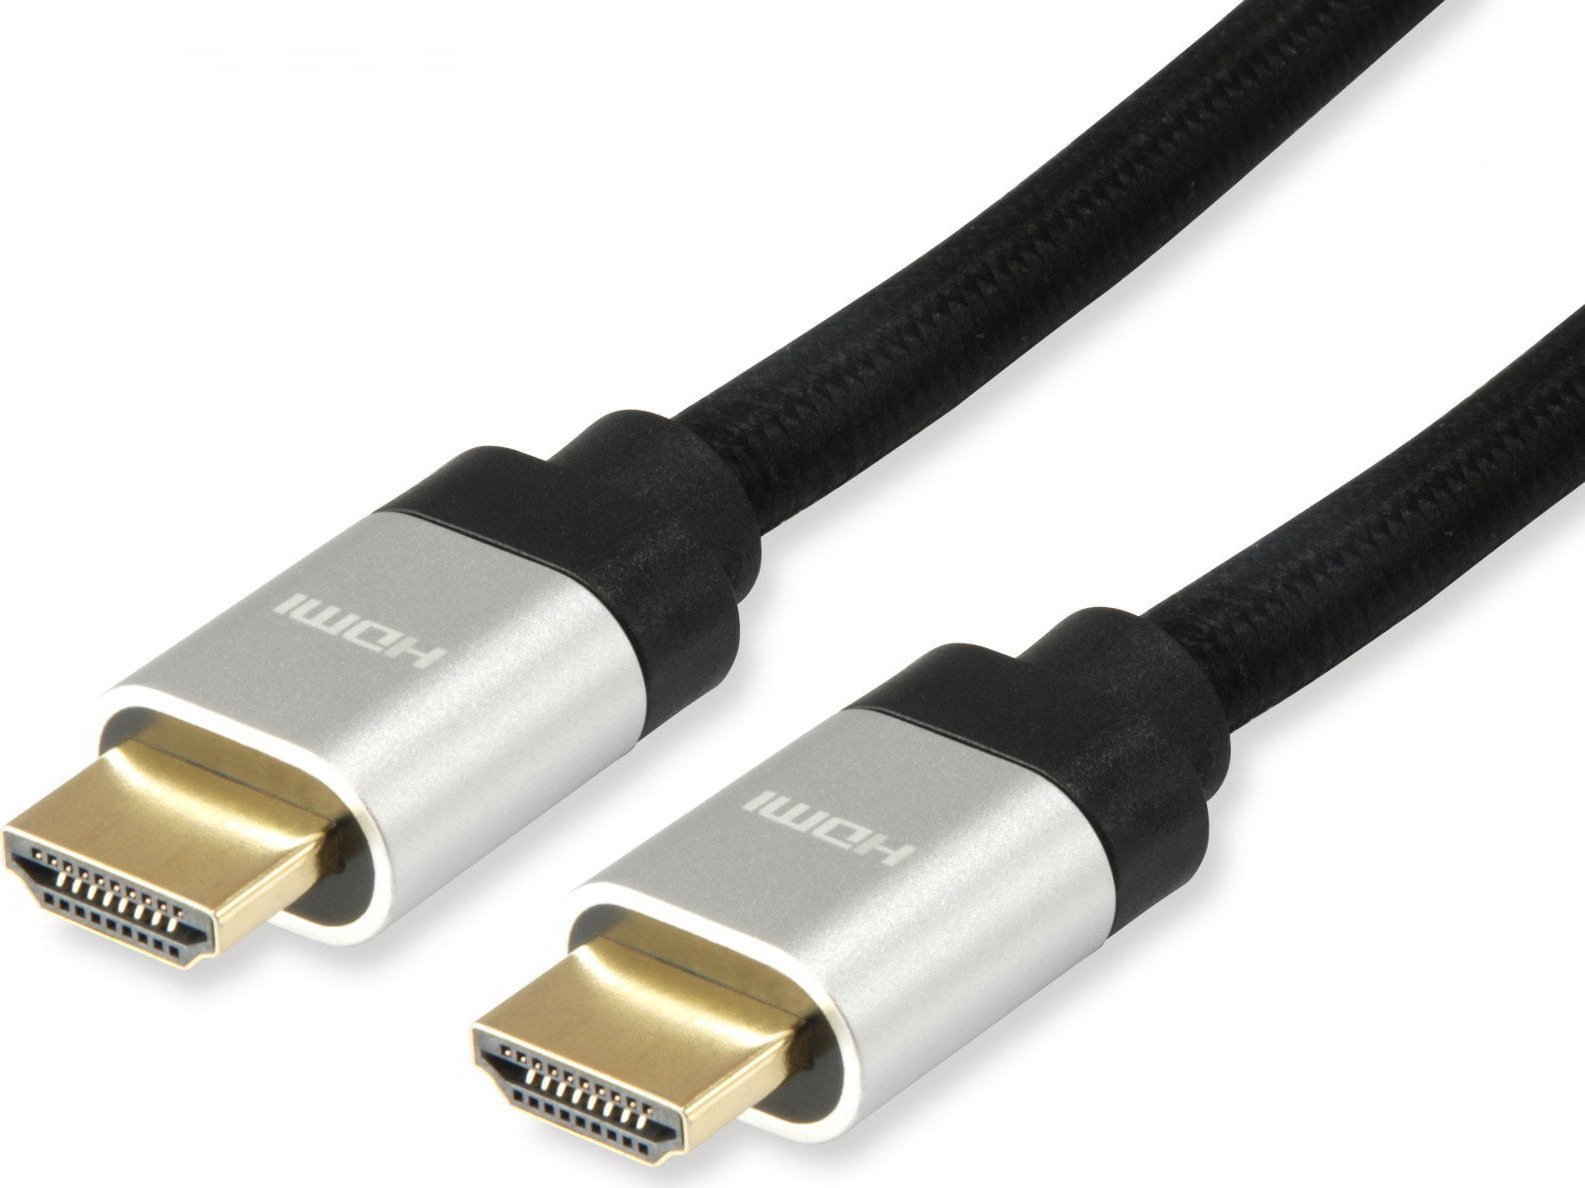 Cable Equip Hdmi 2.1 Ultra 8k 3m Highspeed (EQ119382) - Innova Informática  : Cable HDMI